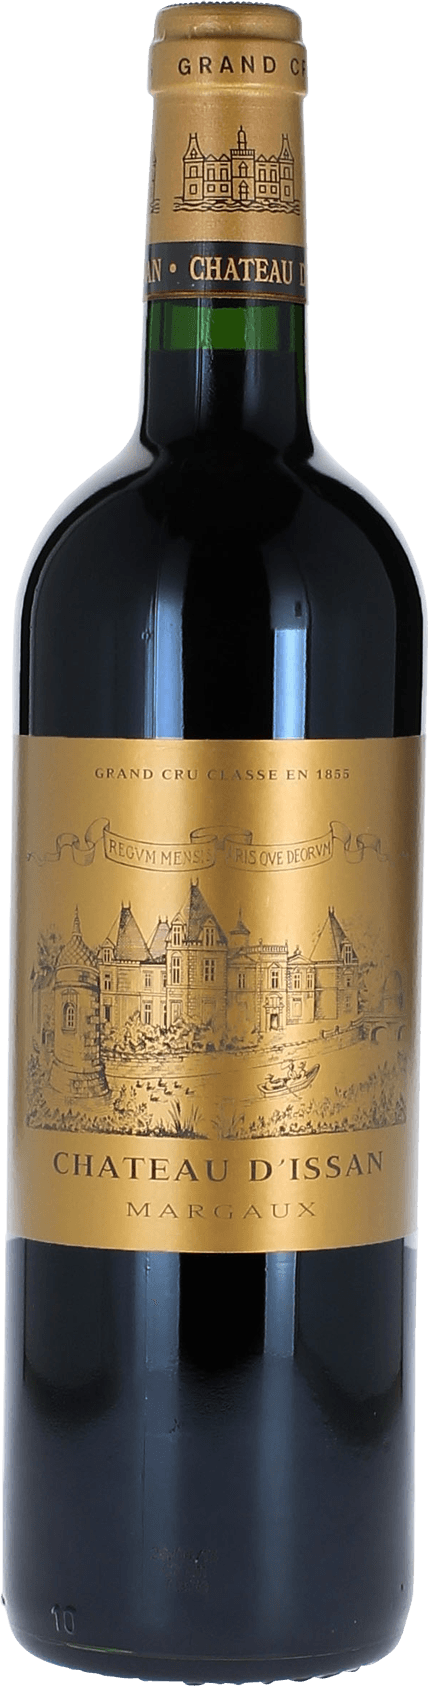 Issan 2000 3me Grand cru class Margaux, Bordeaux rouge